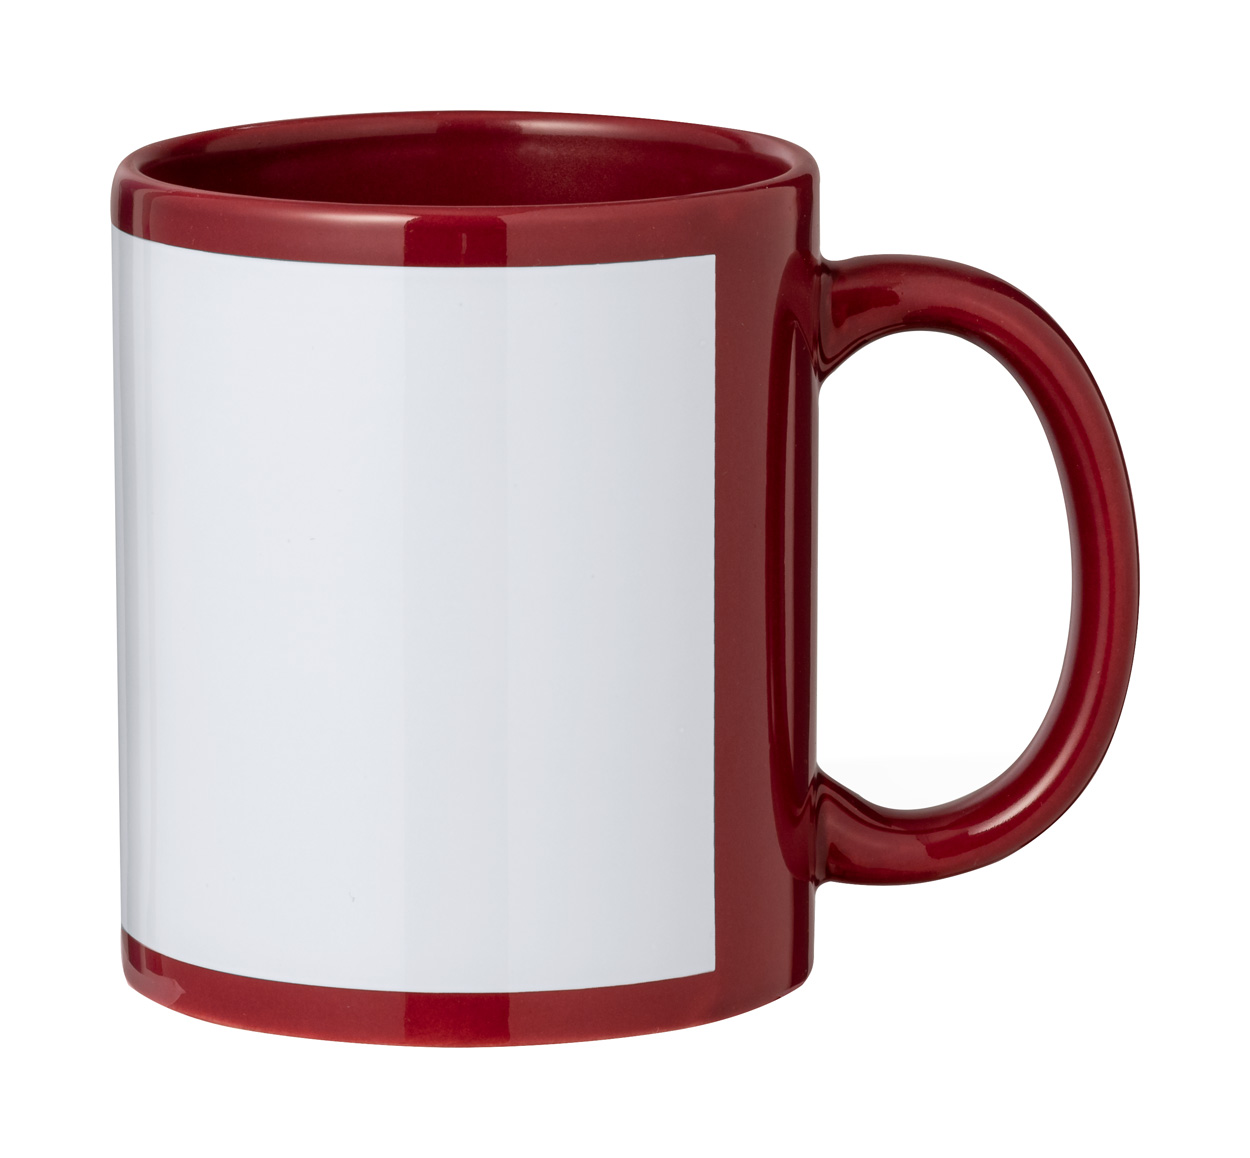 Orchix mug for sublimation - burgundy